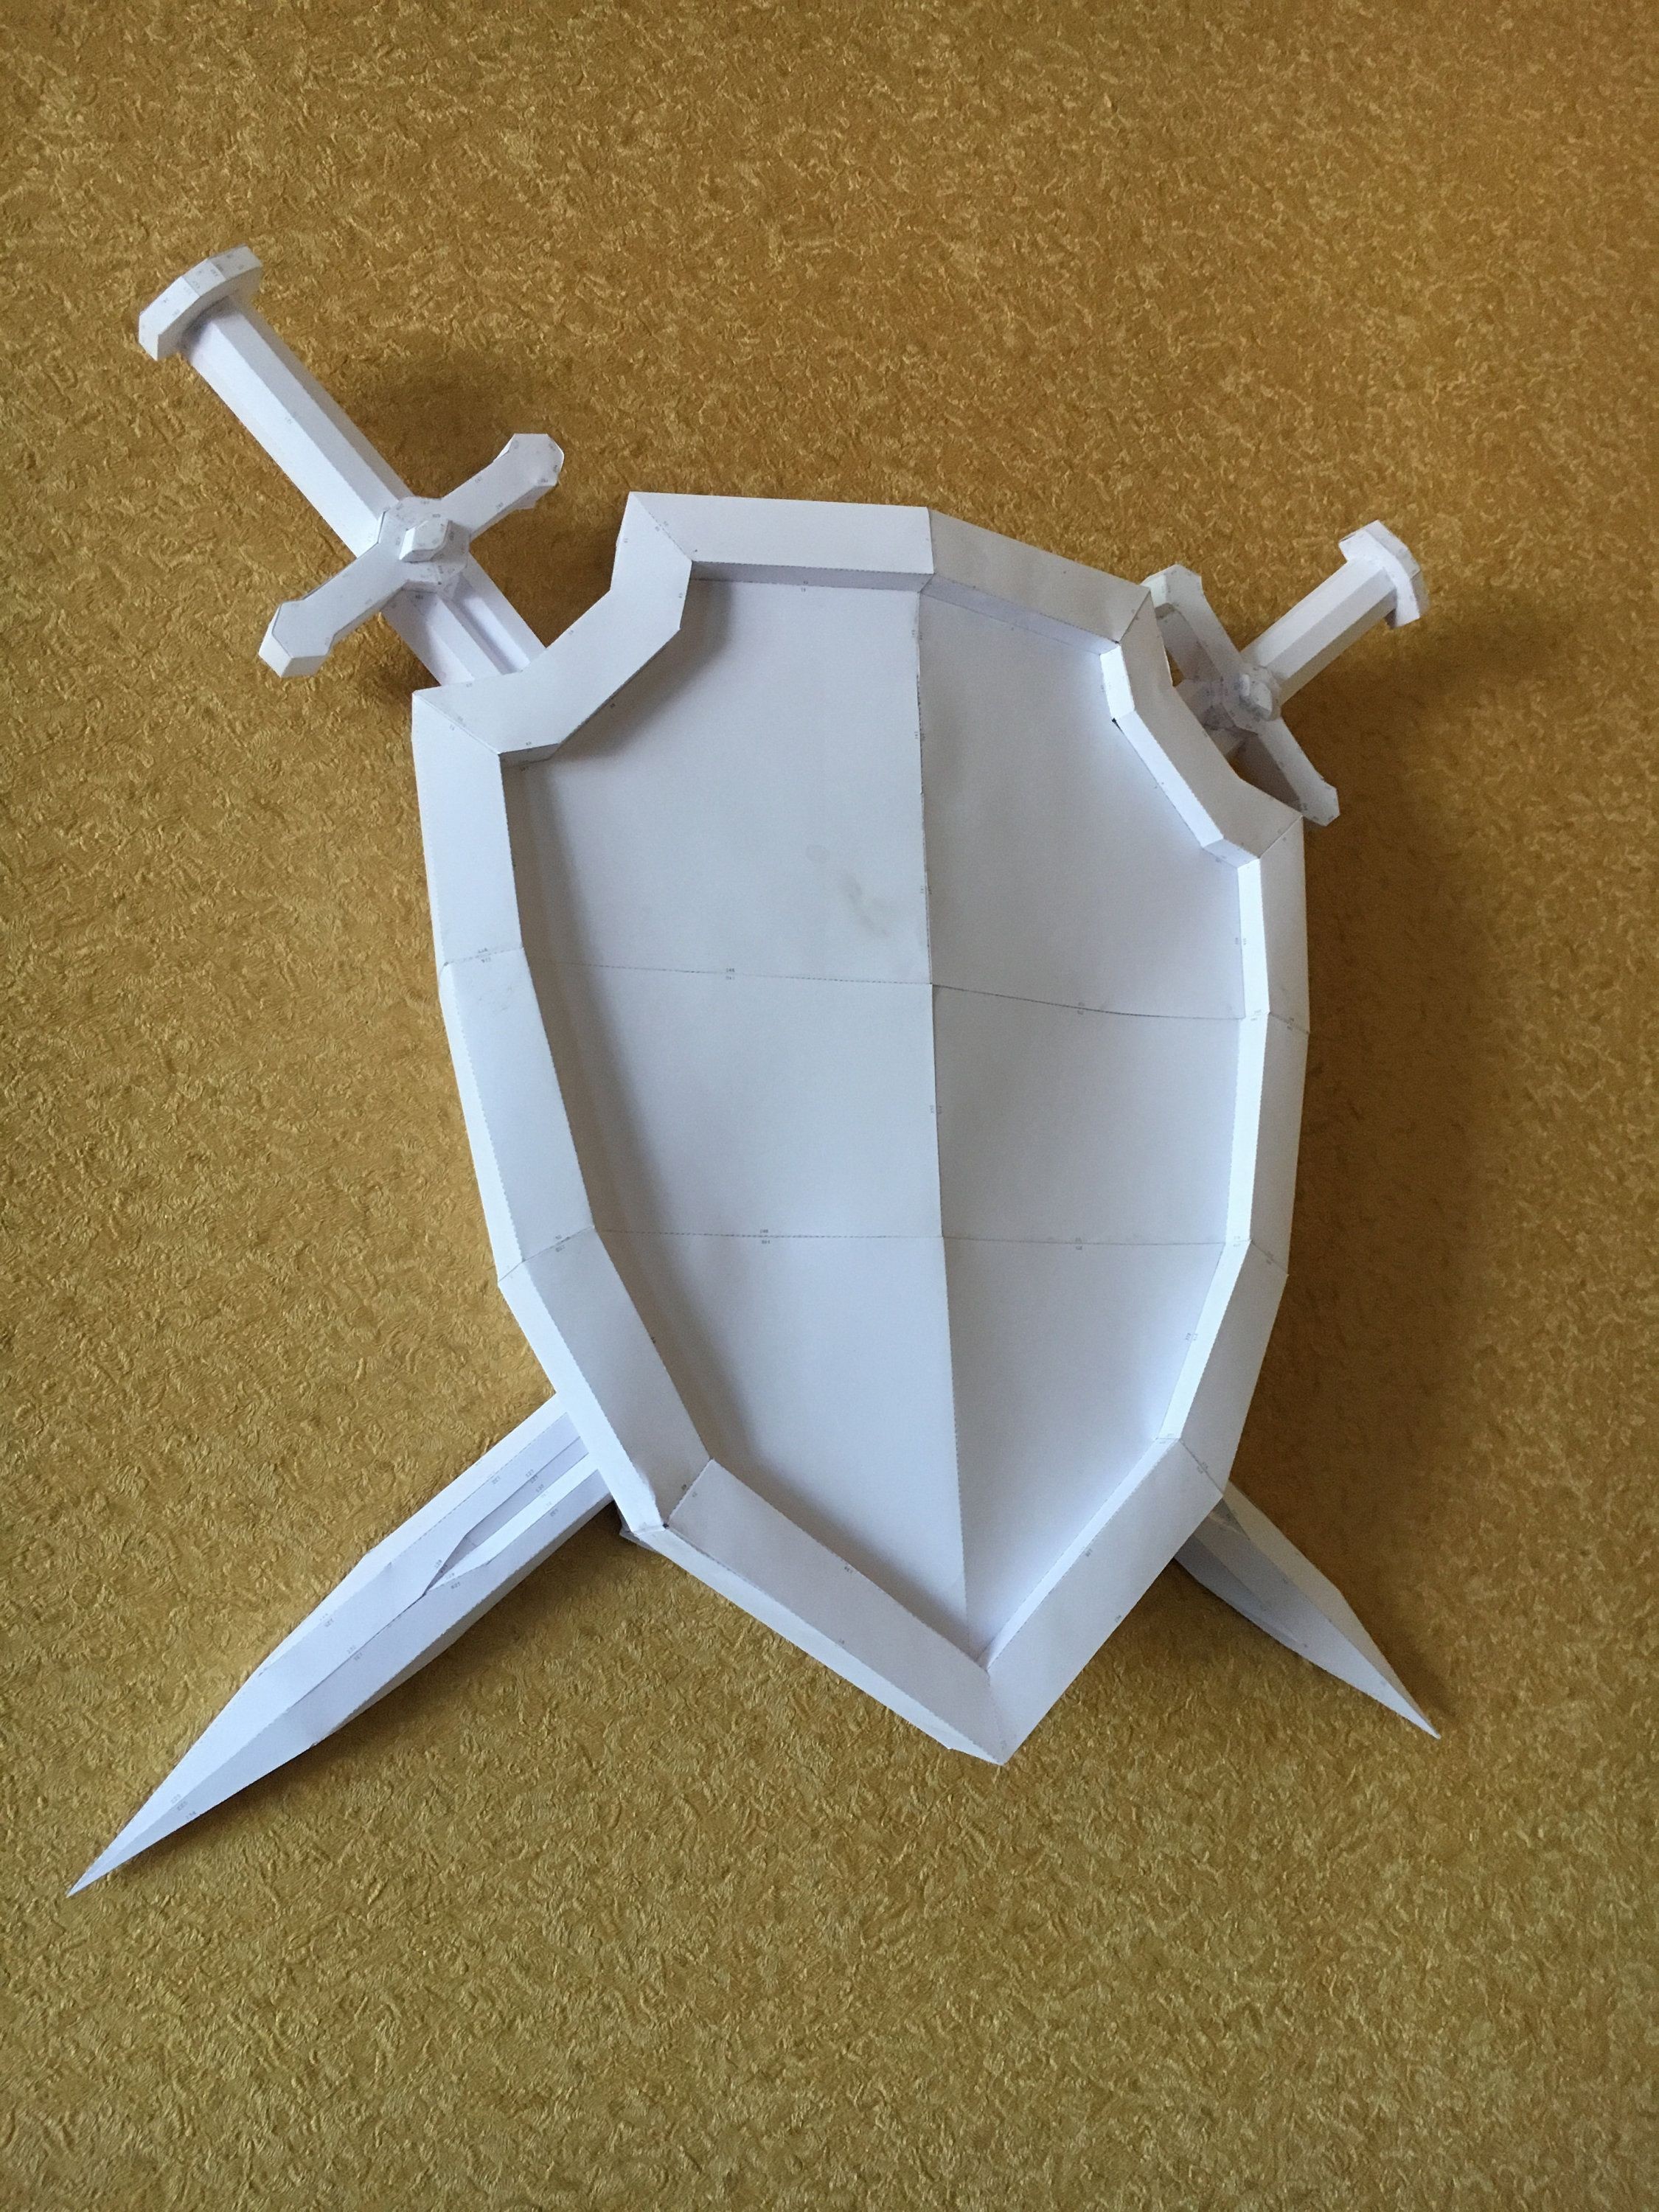 Papercraft Dinosaur Sword Shield Diy Papercraft Model ÐÑÐ¼Ð°Ð¶Ð½ÑÐµ Ð¸Ð·Ð´ÐµÐ Ð¸Ñ